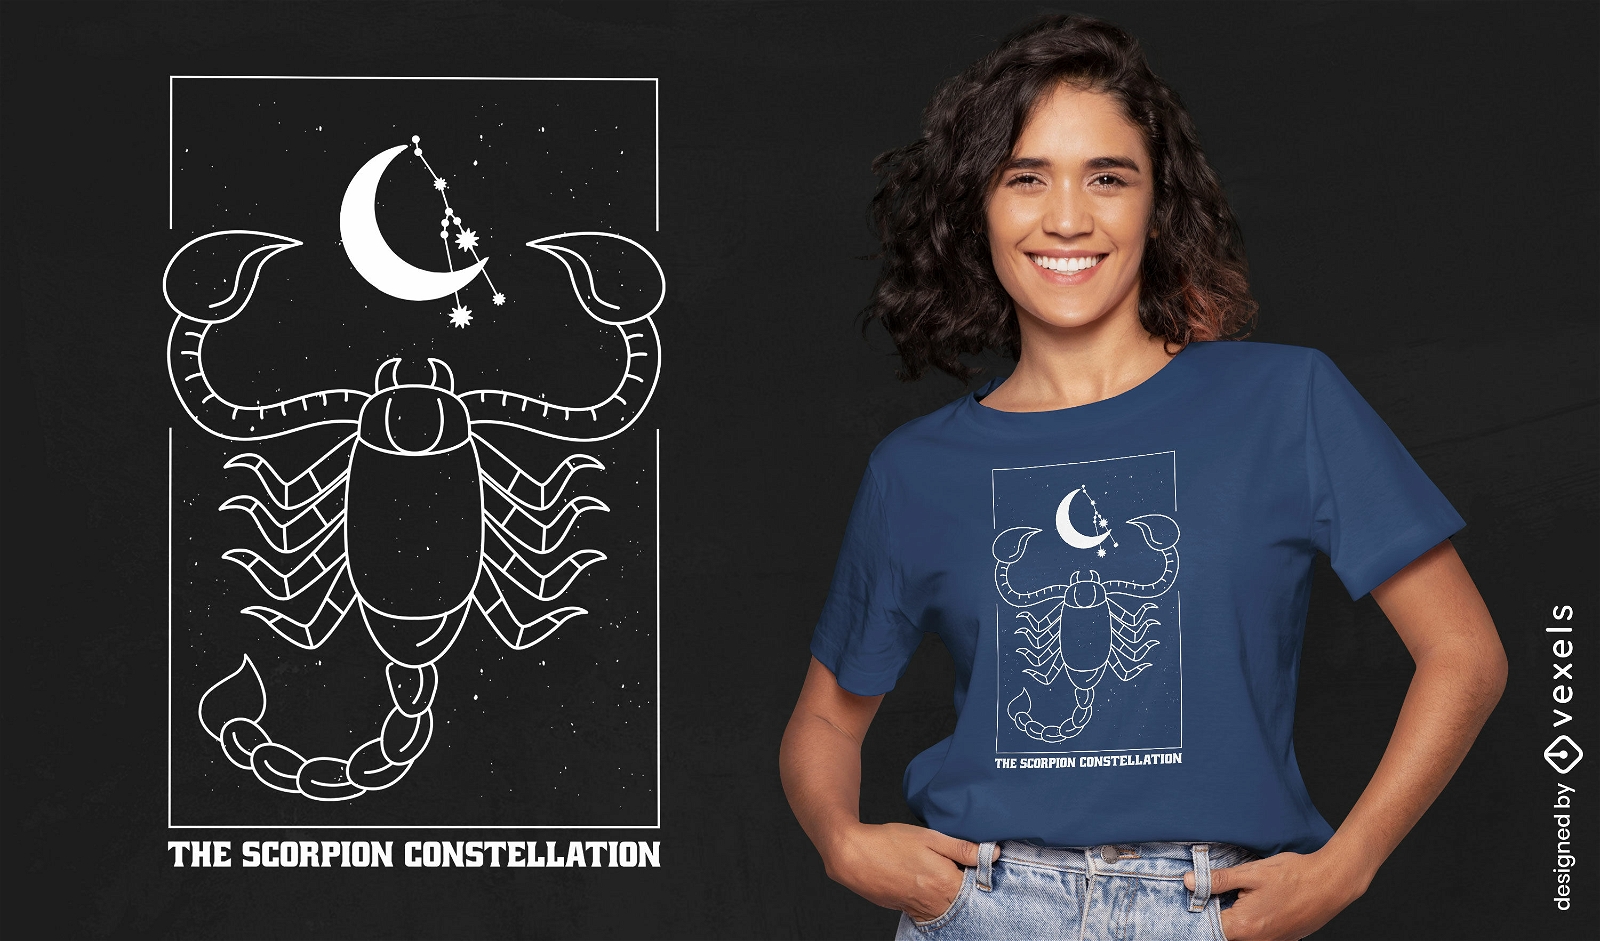 Scorpion constellation t-shirt design